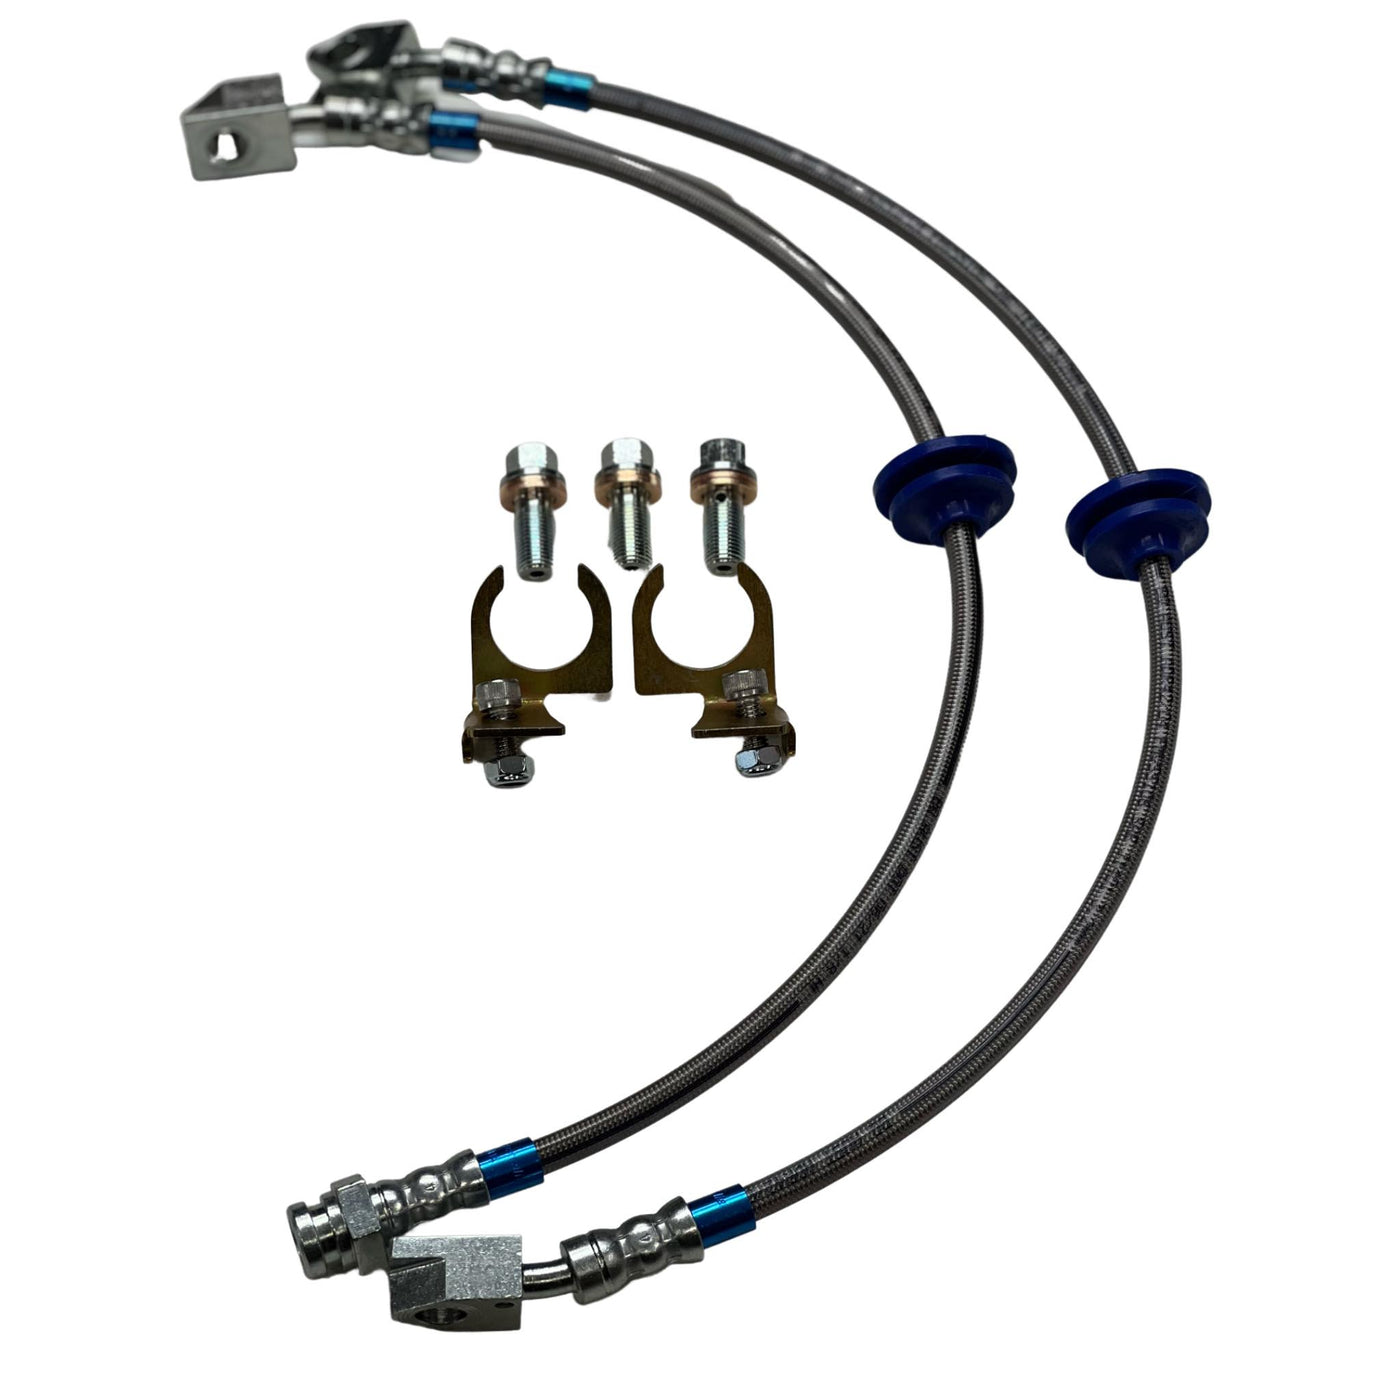 510/1600 R31 Rear disc brake stainless steel braided hose conversion kit & fittings (street legal)